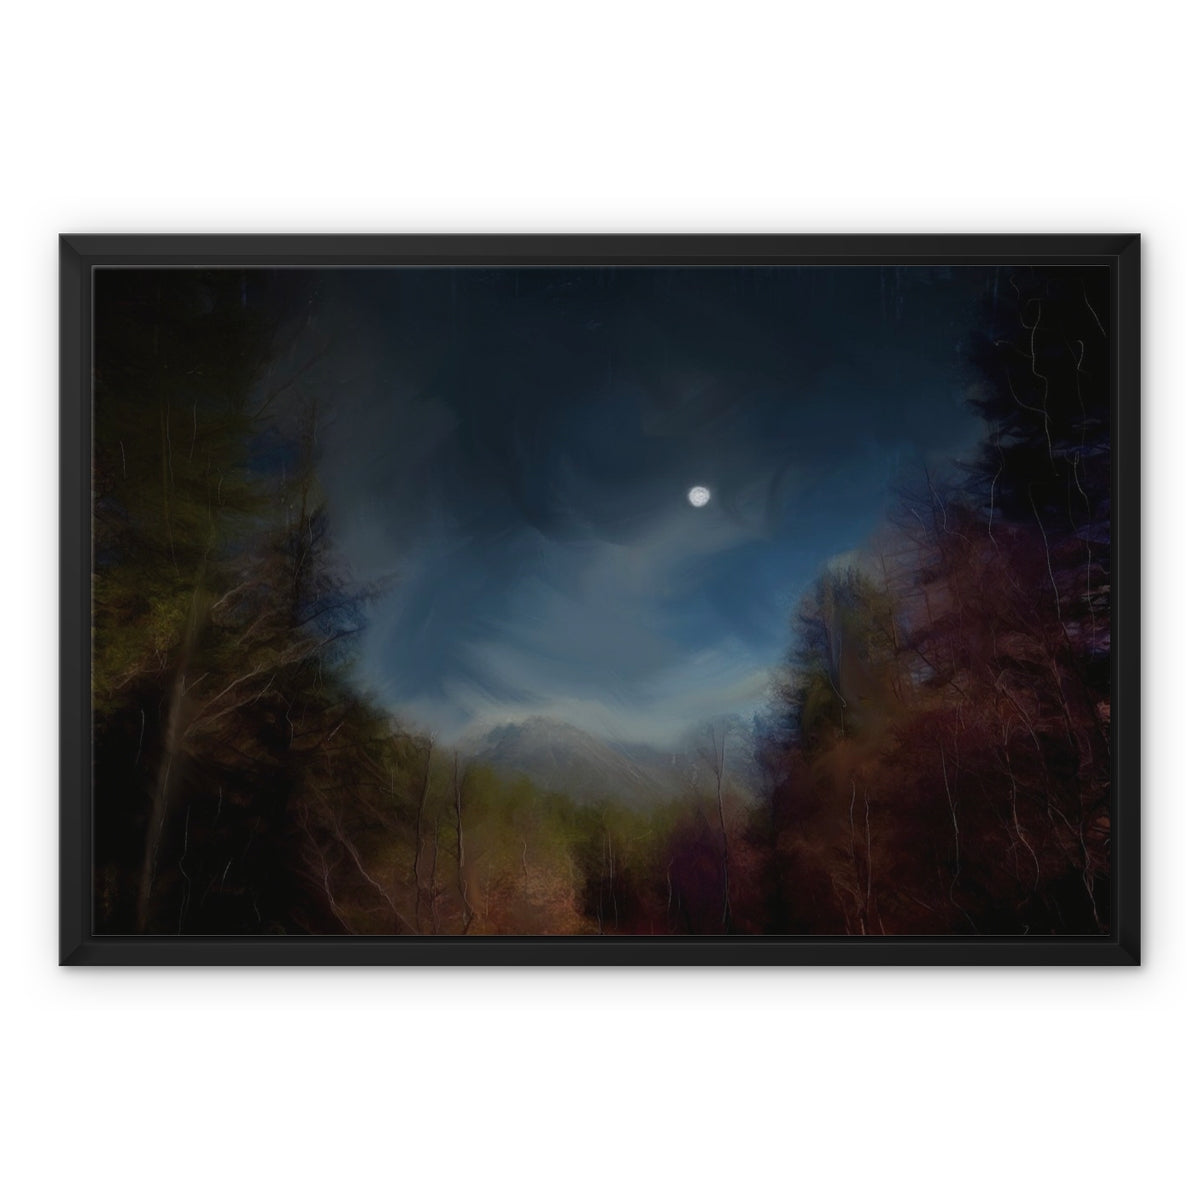 Glencoe Lochan Moonlight Painting | Framed Canvas From Scotland-Floating Framed Canvas Prints-Scottish Lochs & Mountains Art Gallery-24"x18"-Paintings, Prints, Homeware, Art Gifts From Scotland By Scottish Artist Kevin Hunter